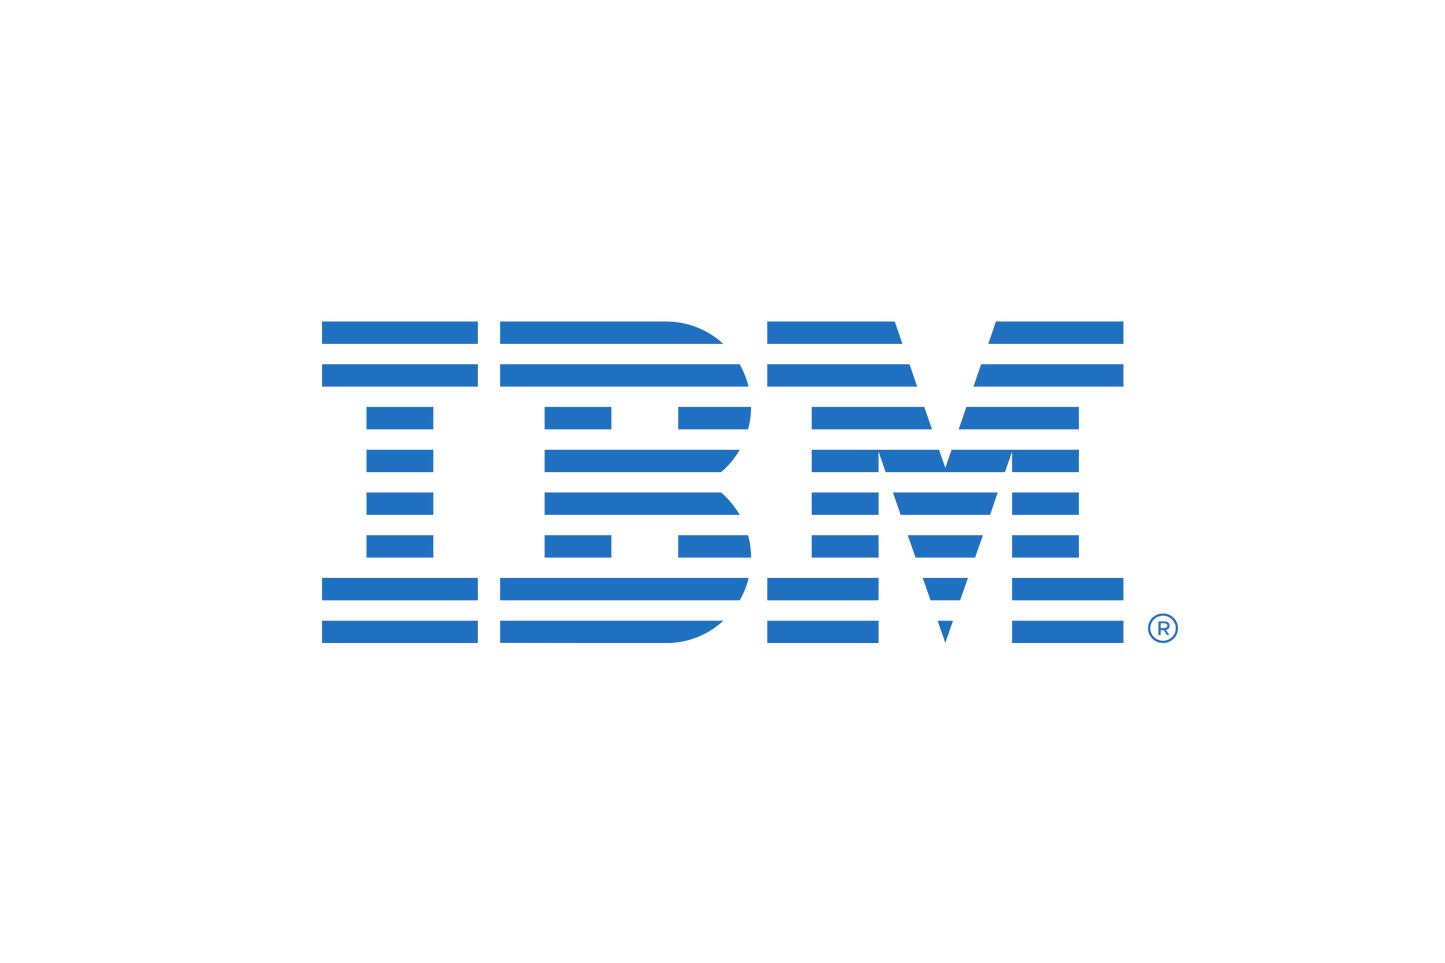 IBM Sterling B2B Services File Transfer Service File Encryption Gigabyte per Month